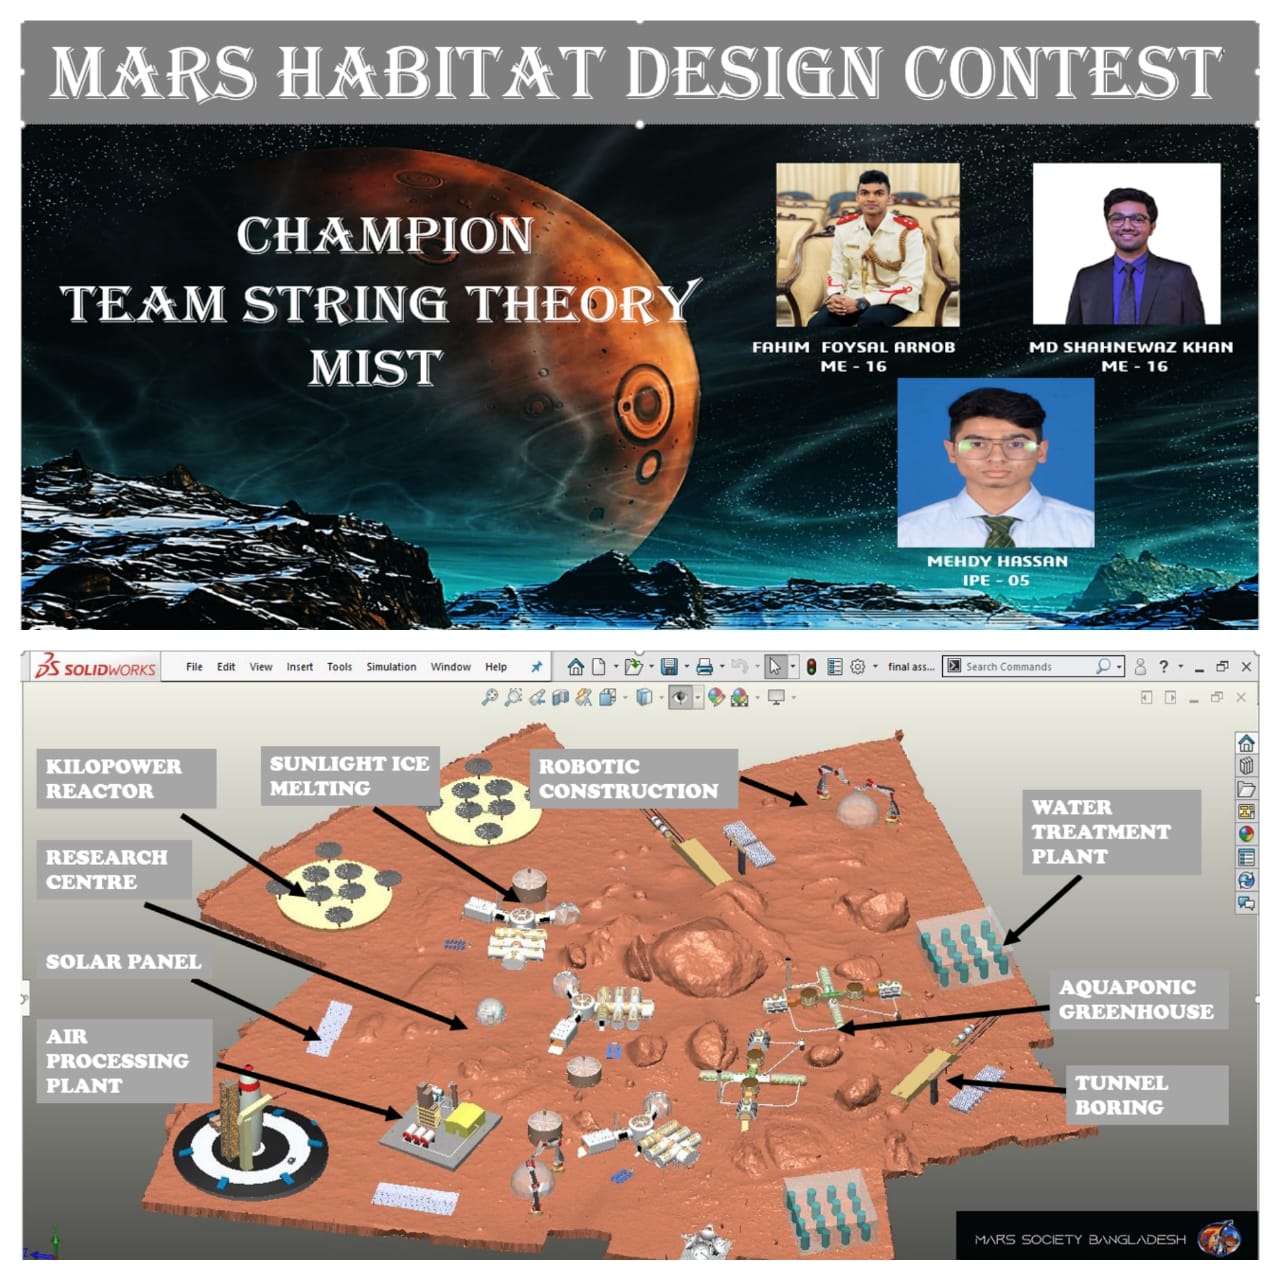 MARS HABITAT DESIGN CONTEST FROM MARS SOCIETY BANGLADESH